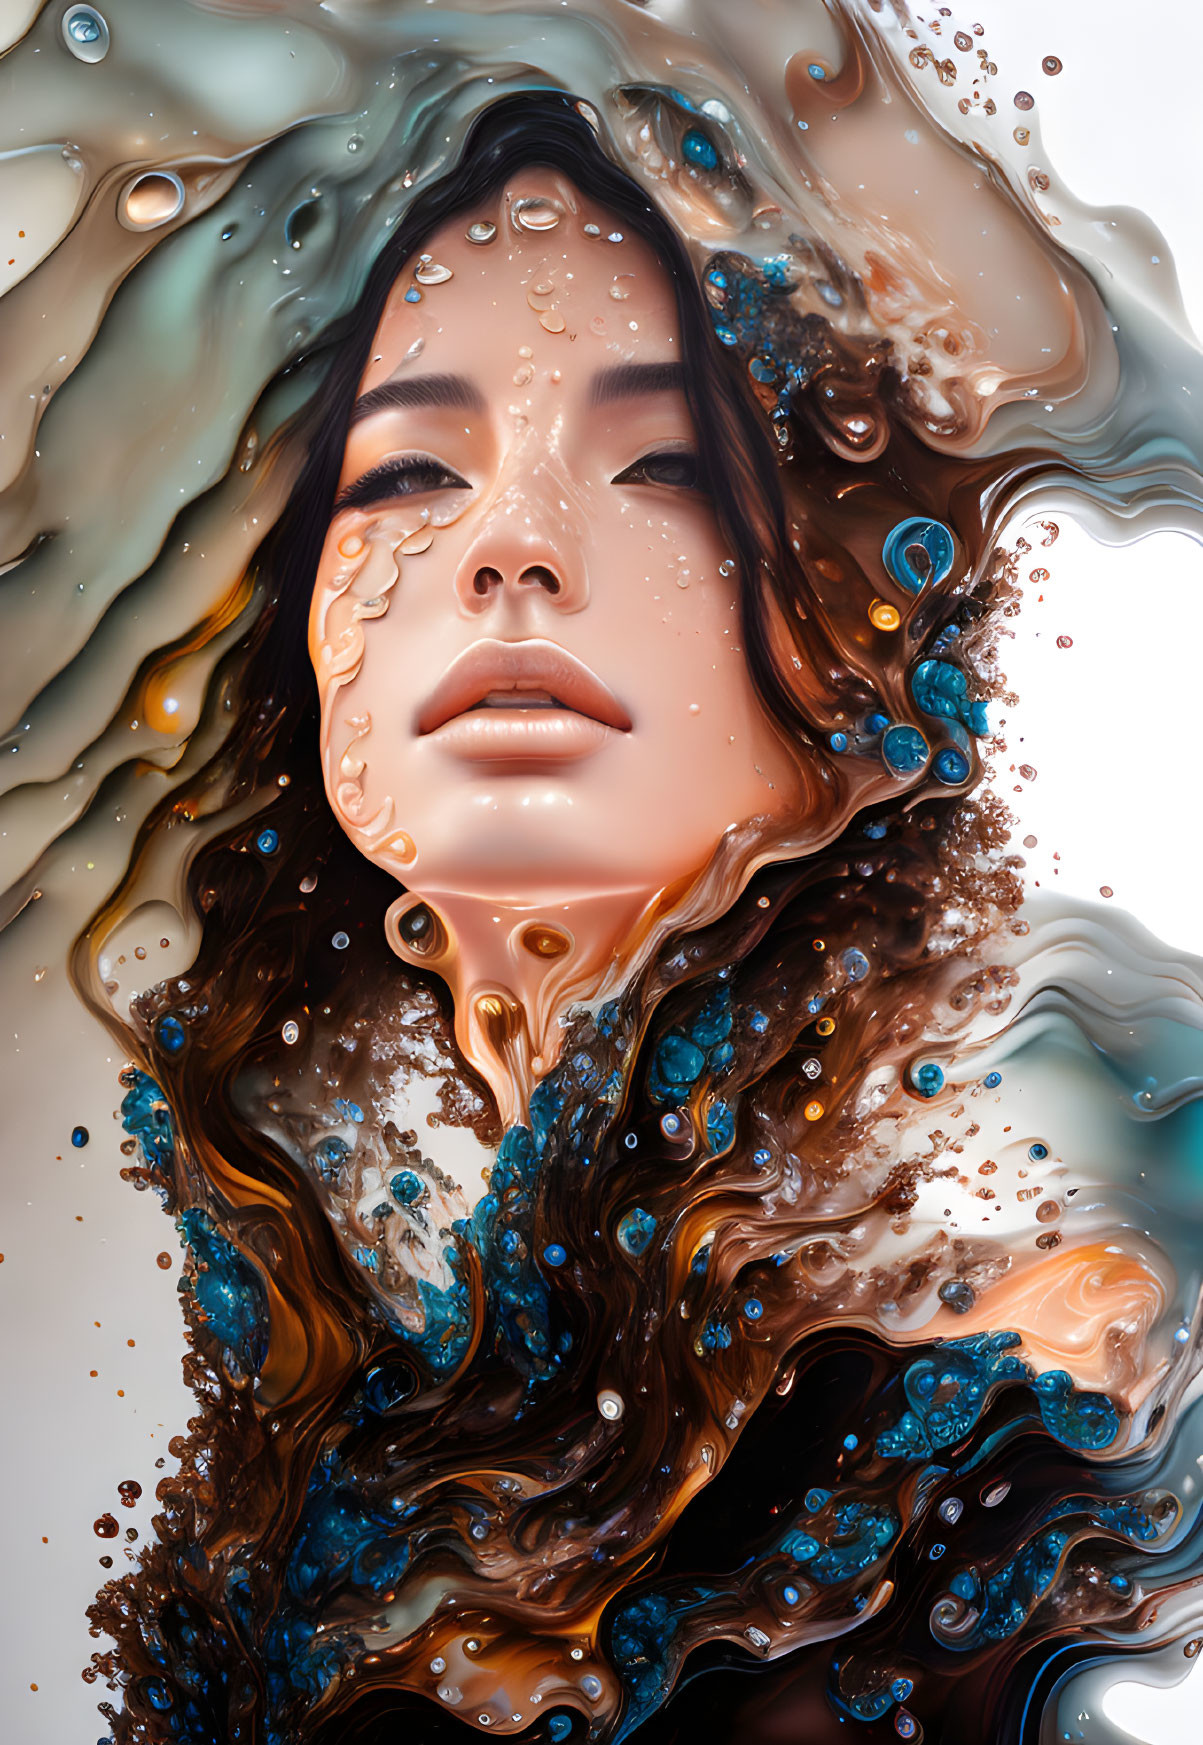 Surreal portrait of woman blending into liquid waves and bubbles